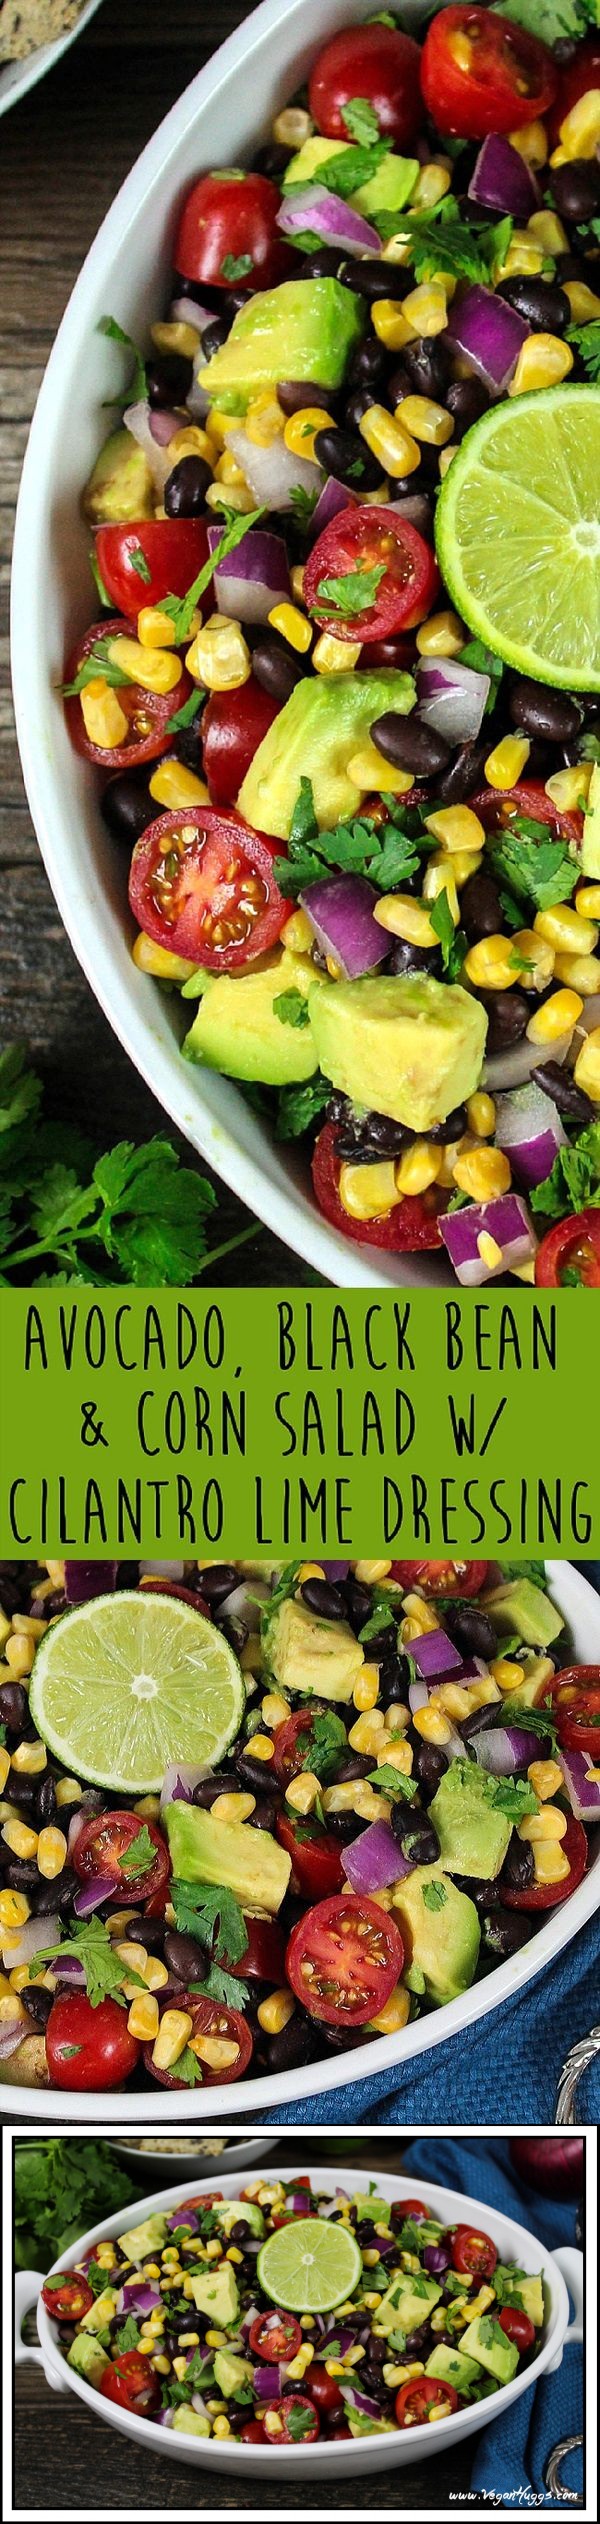 Avocado, Black Bean & Corn Salad W/ Cilantro-Lime Dressing